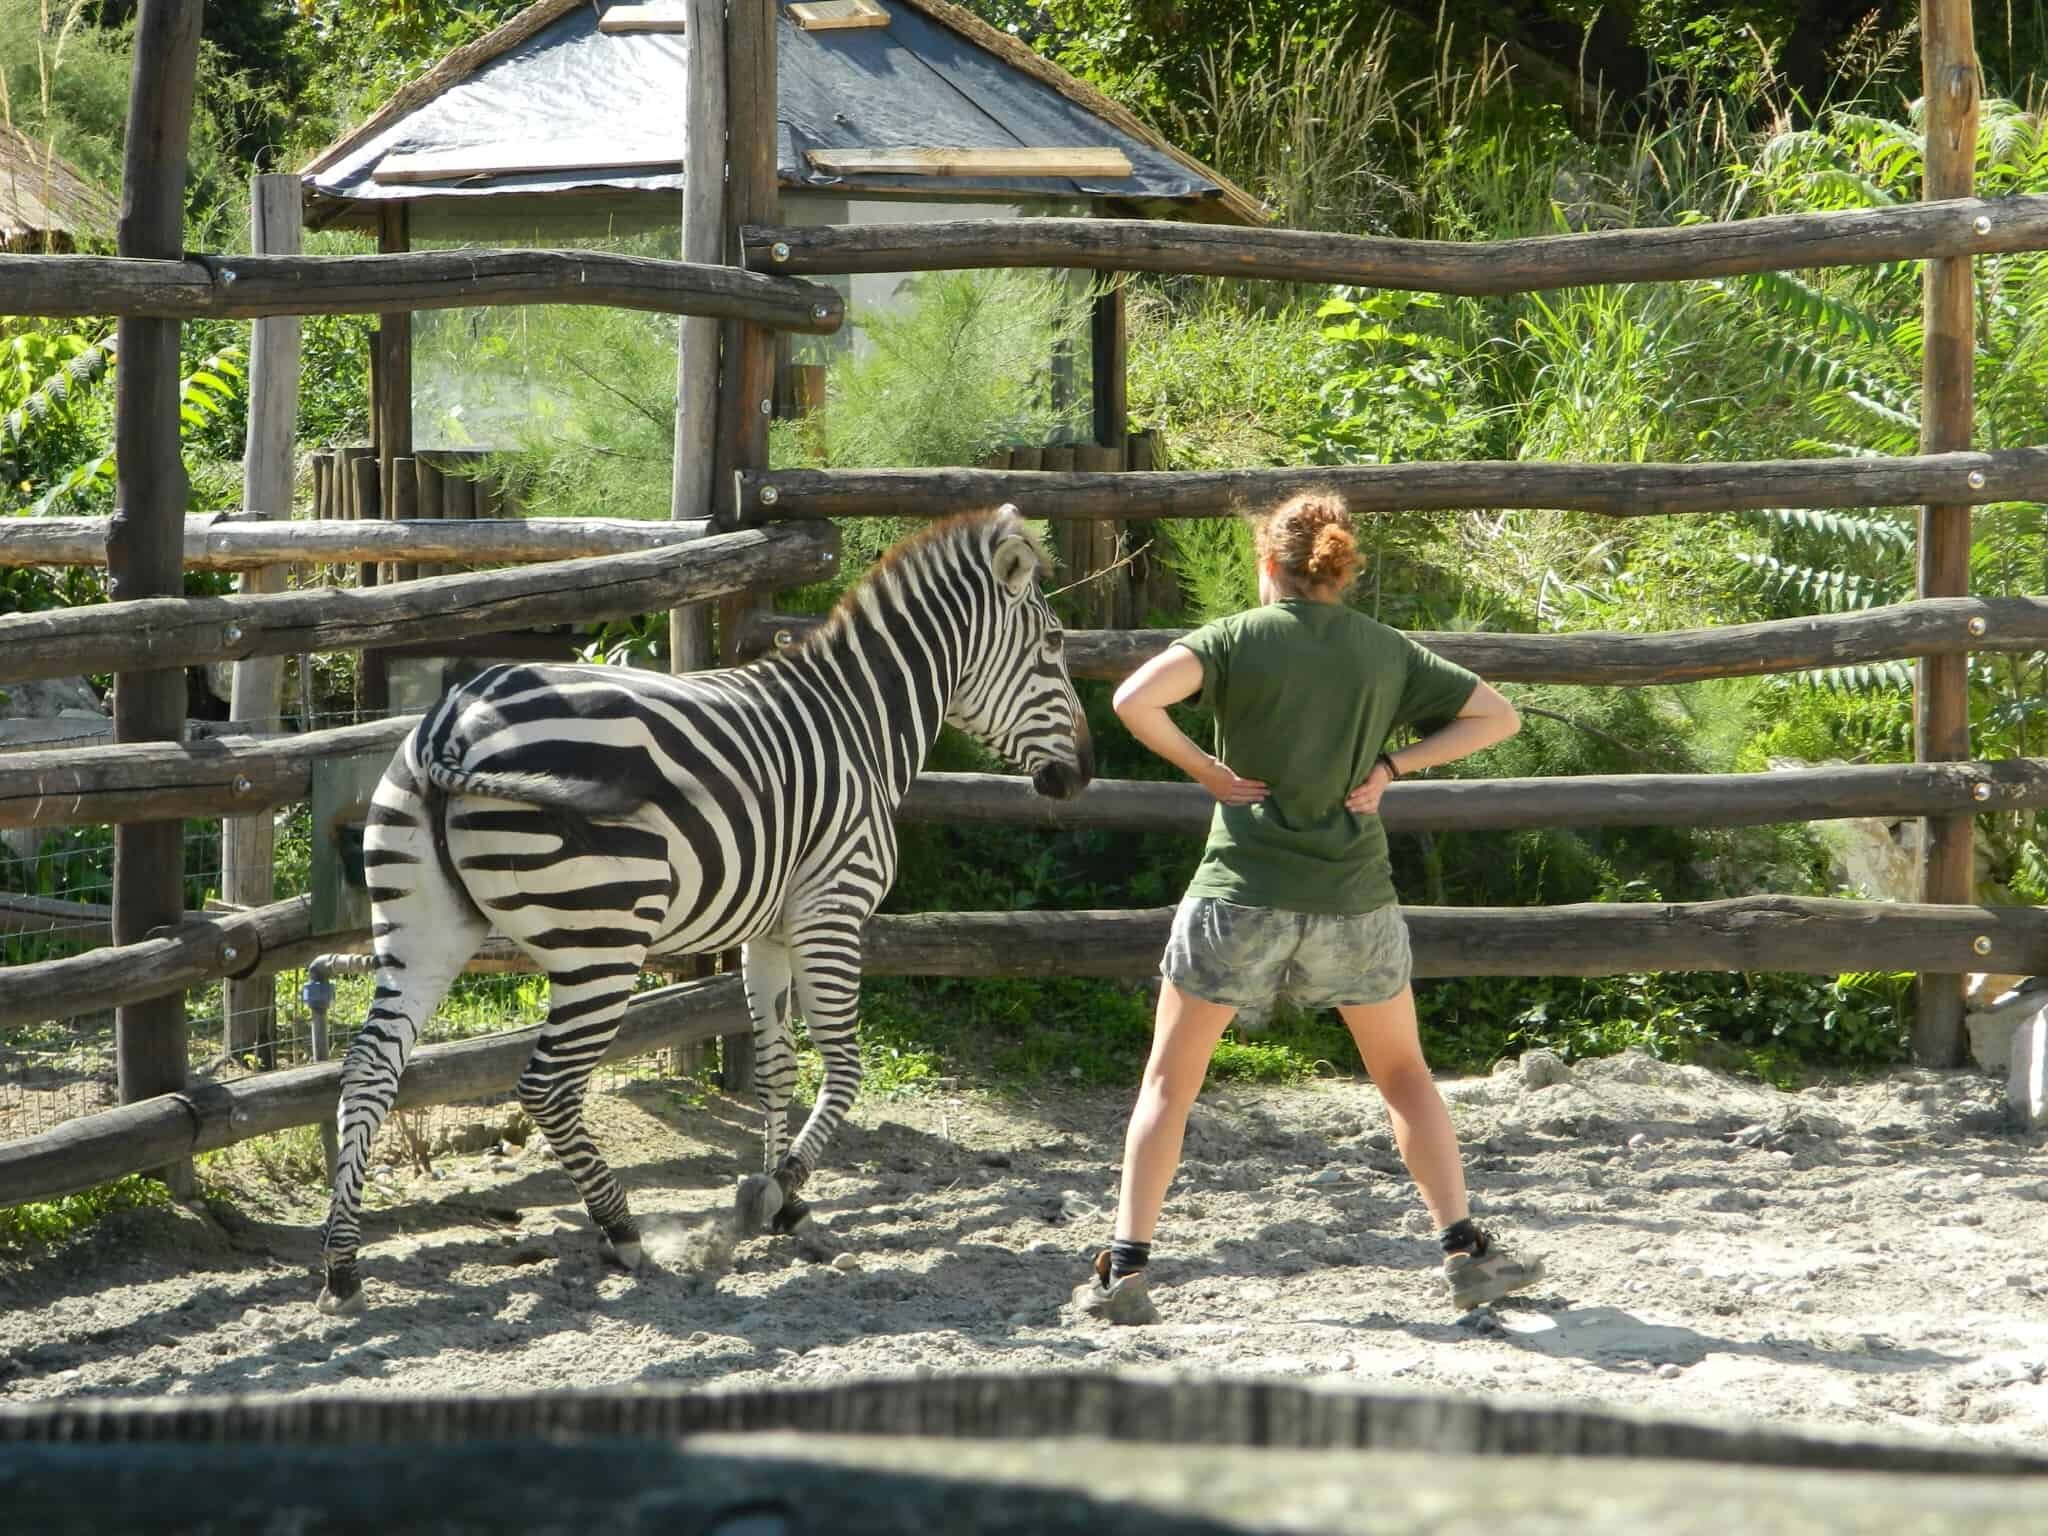 Naughty zebra at Budapest Zoo!